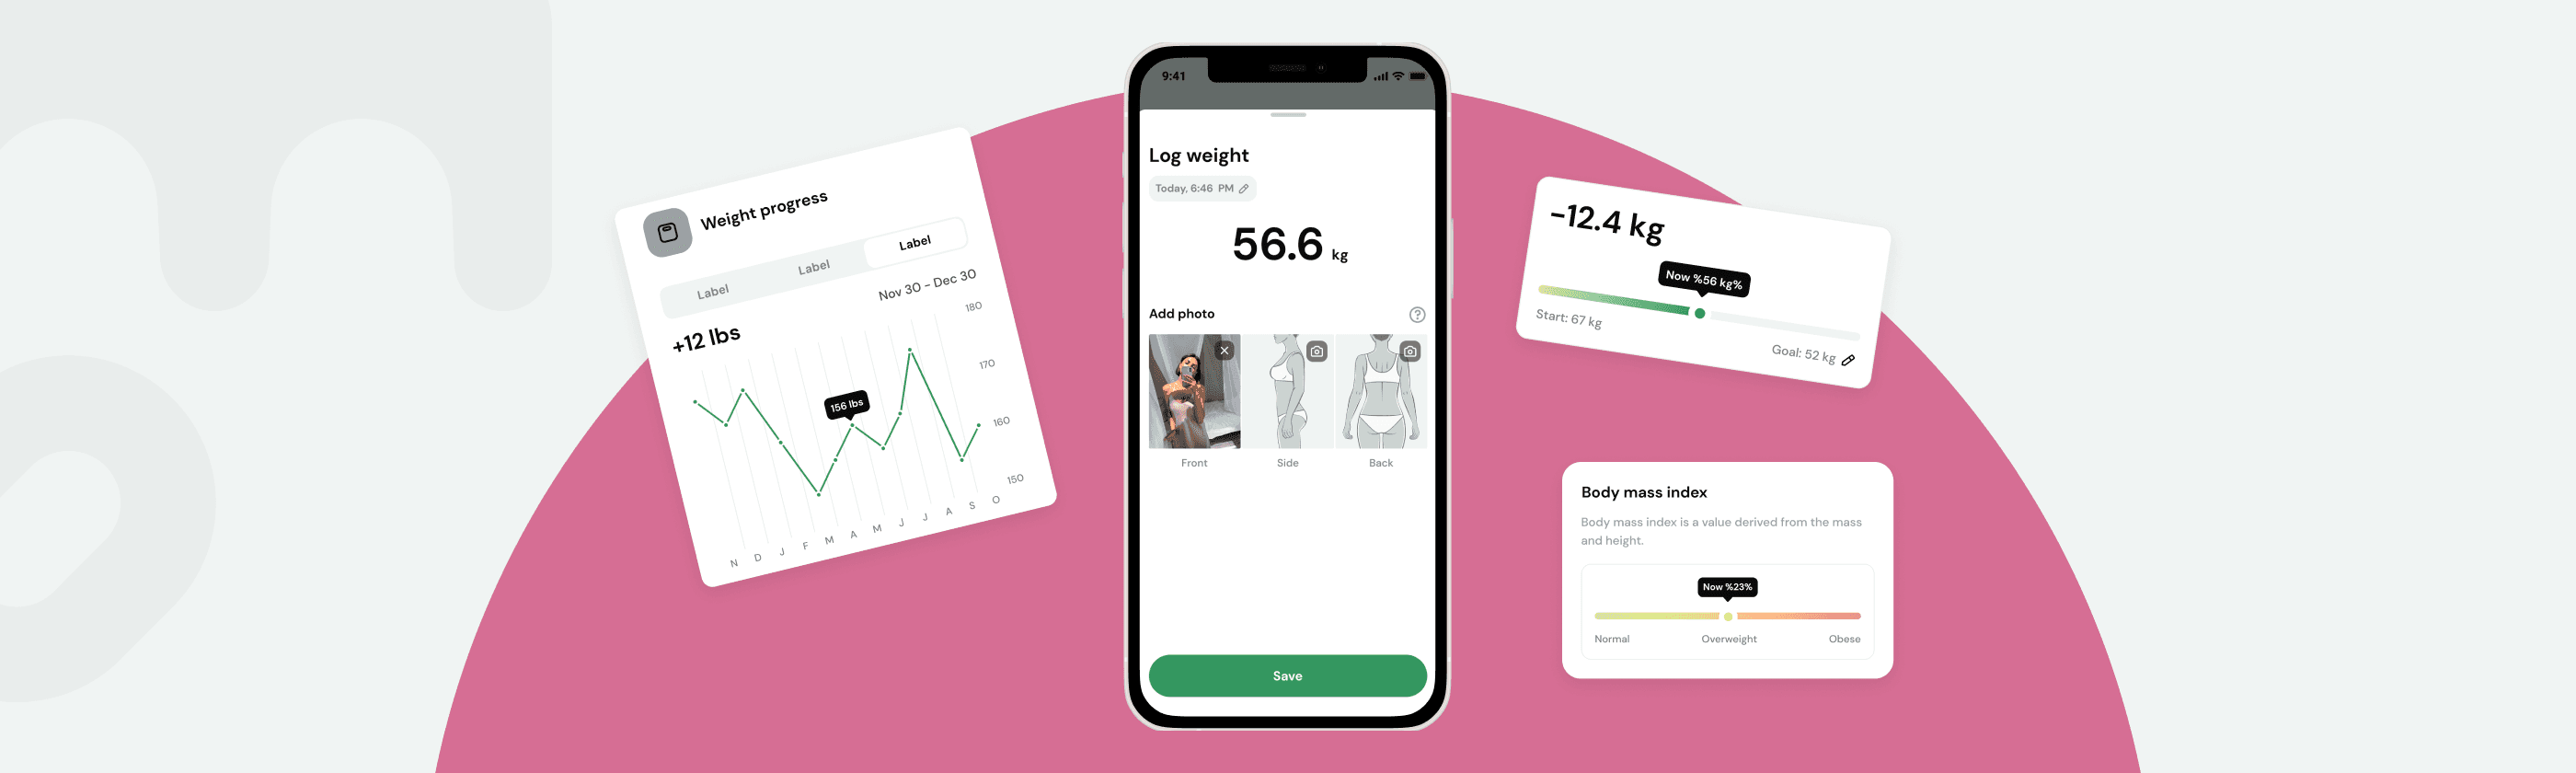 Lasta Weight Tracker App for Lasting Results